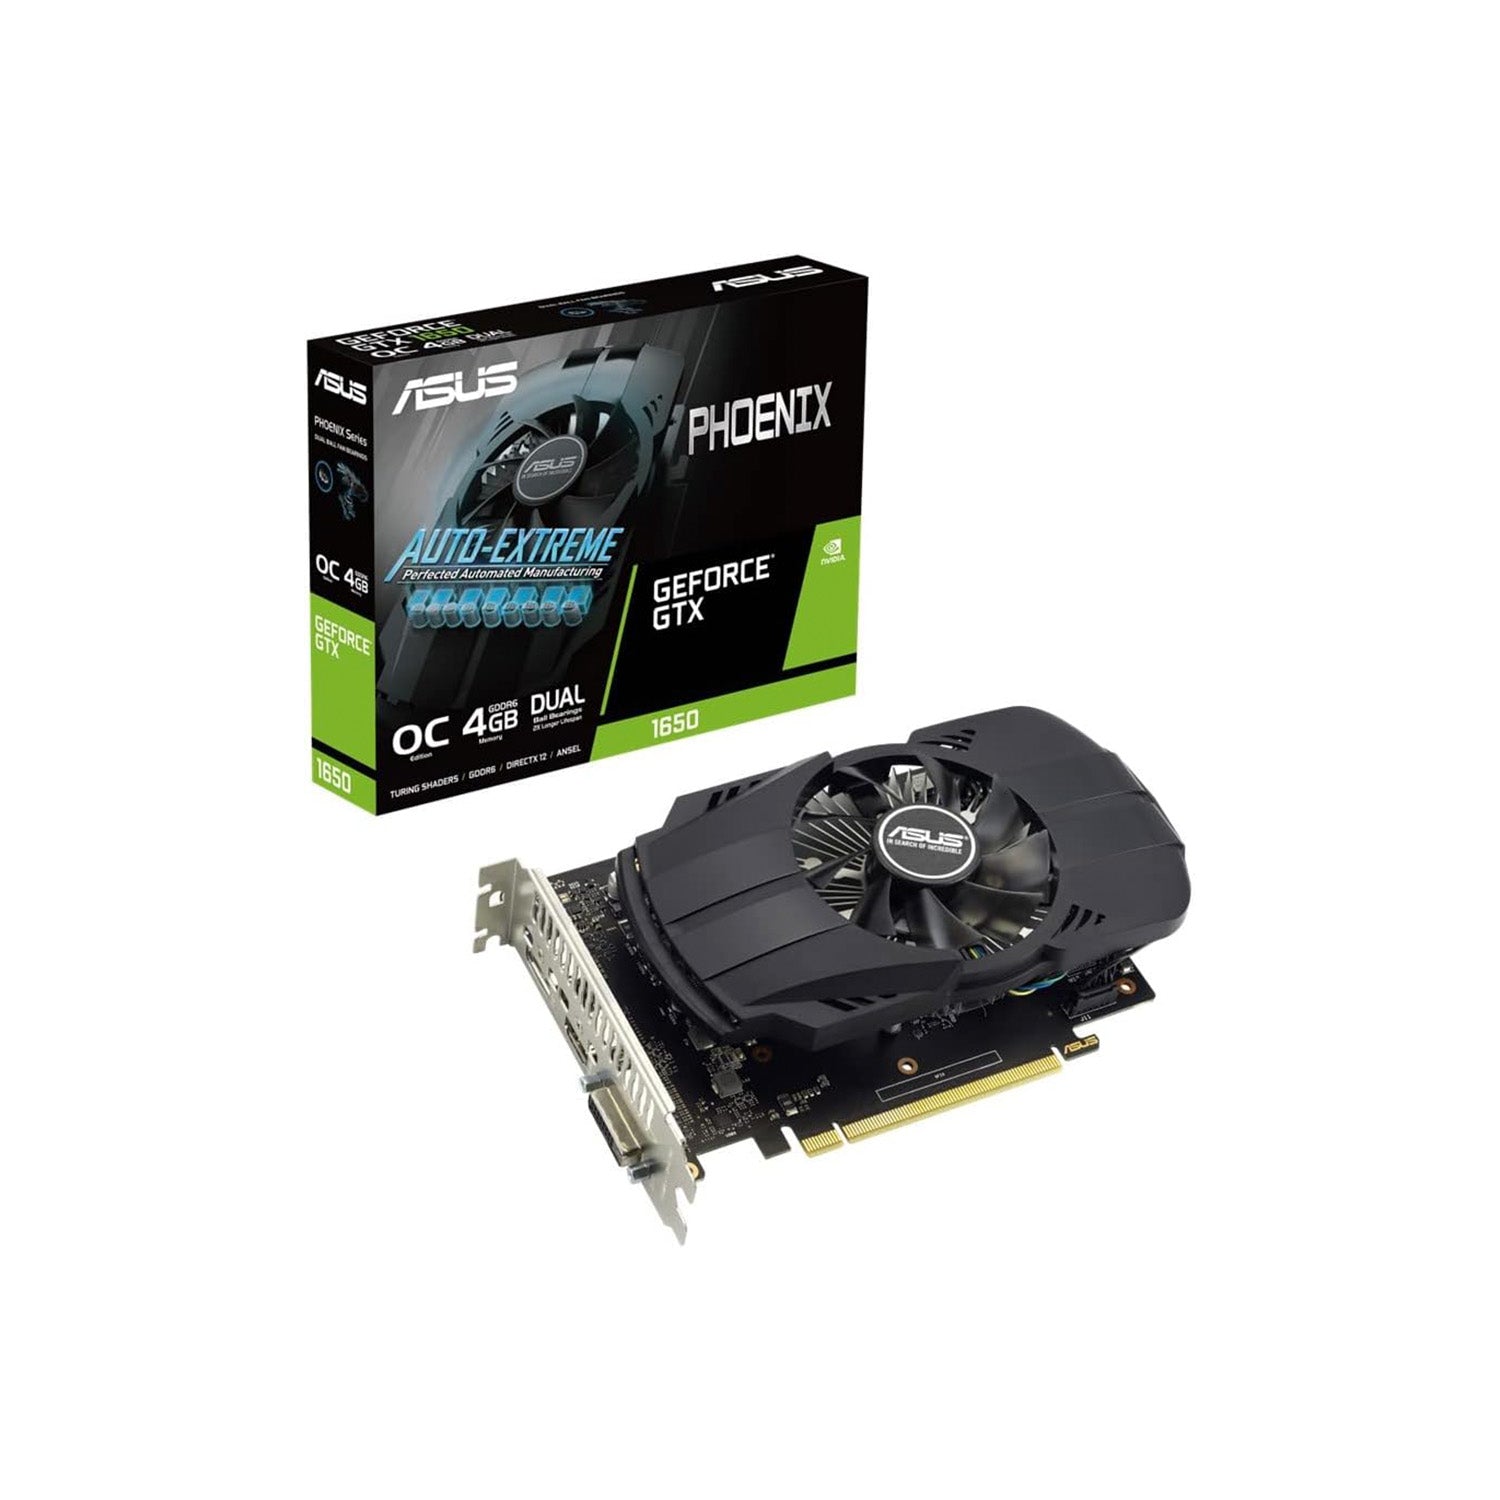 ASUS Phoenix GeForce GTX 1650, 4GB GDDR6 - Video card,